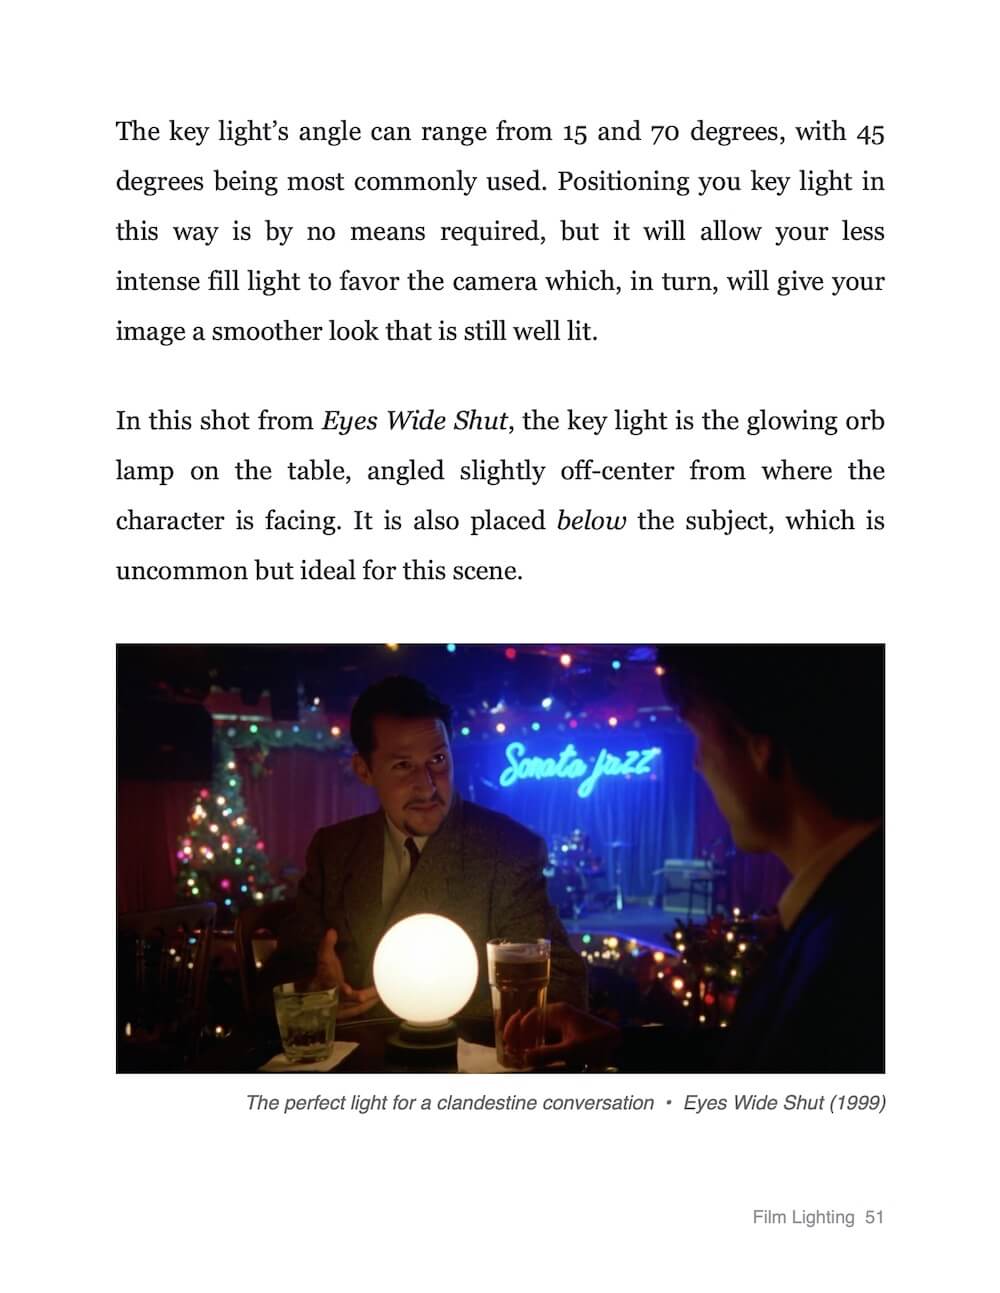 Film Lighting Ebook Key Light StudioBinder